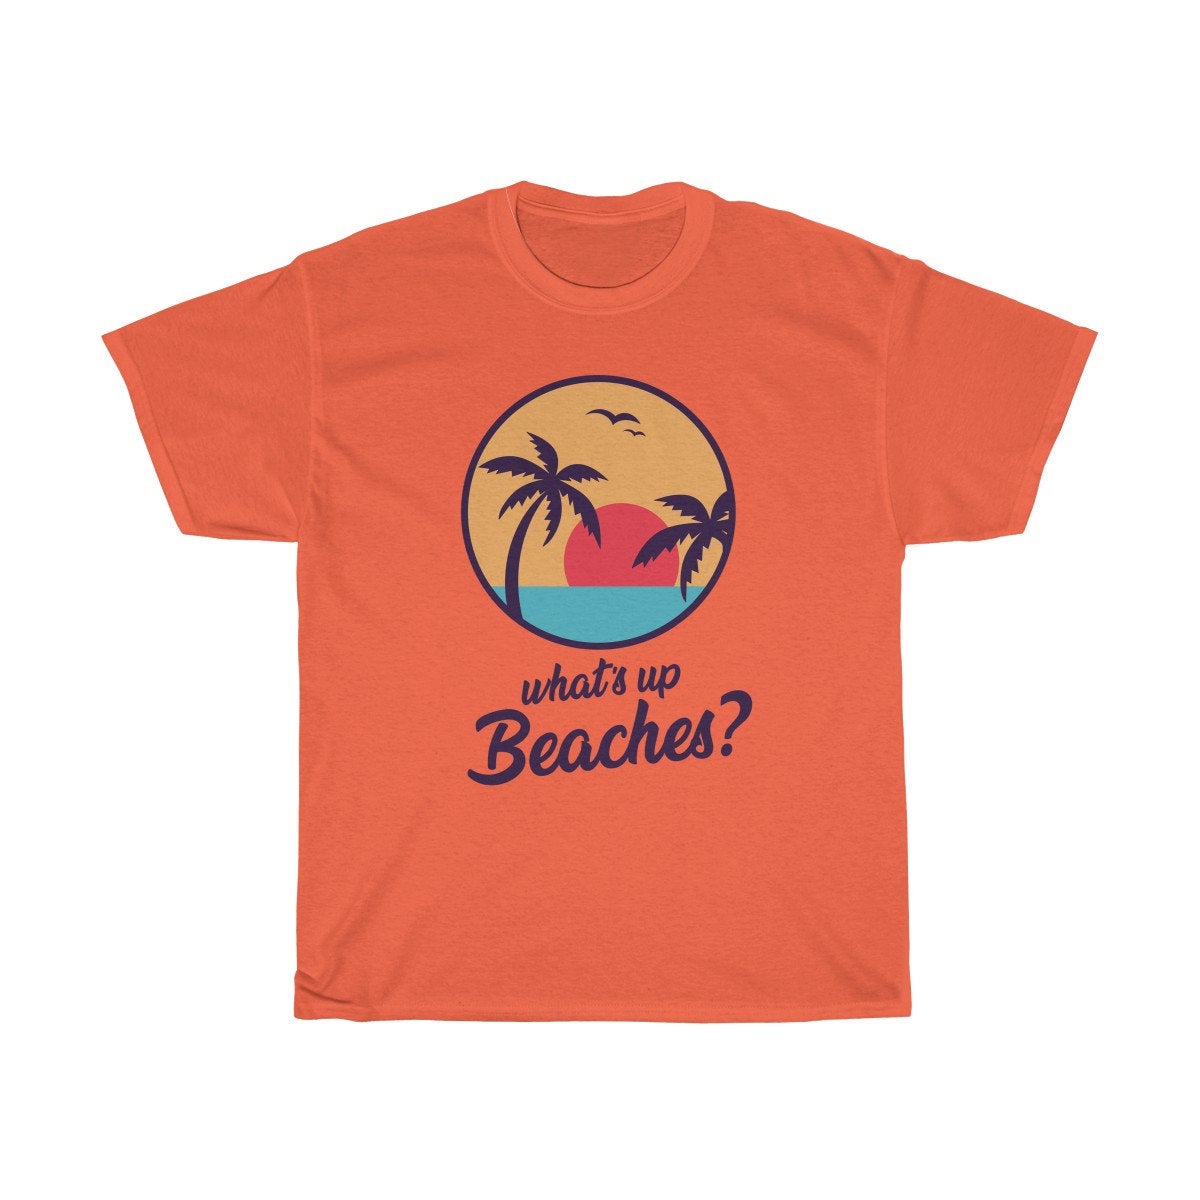 Whats Up Beaches Tshirt